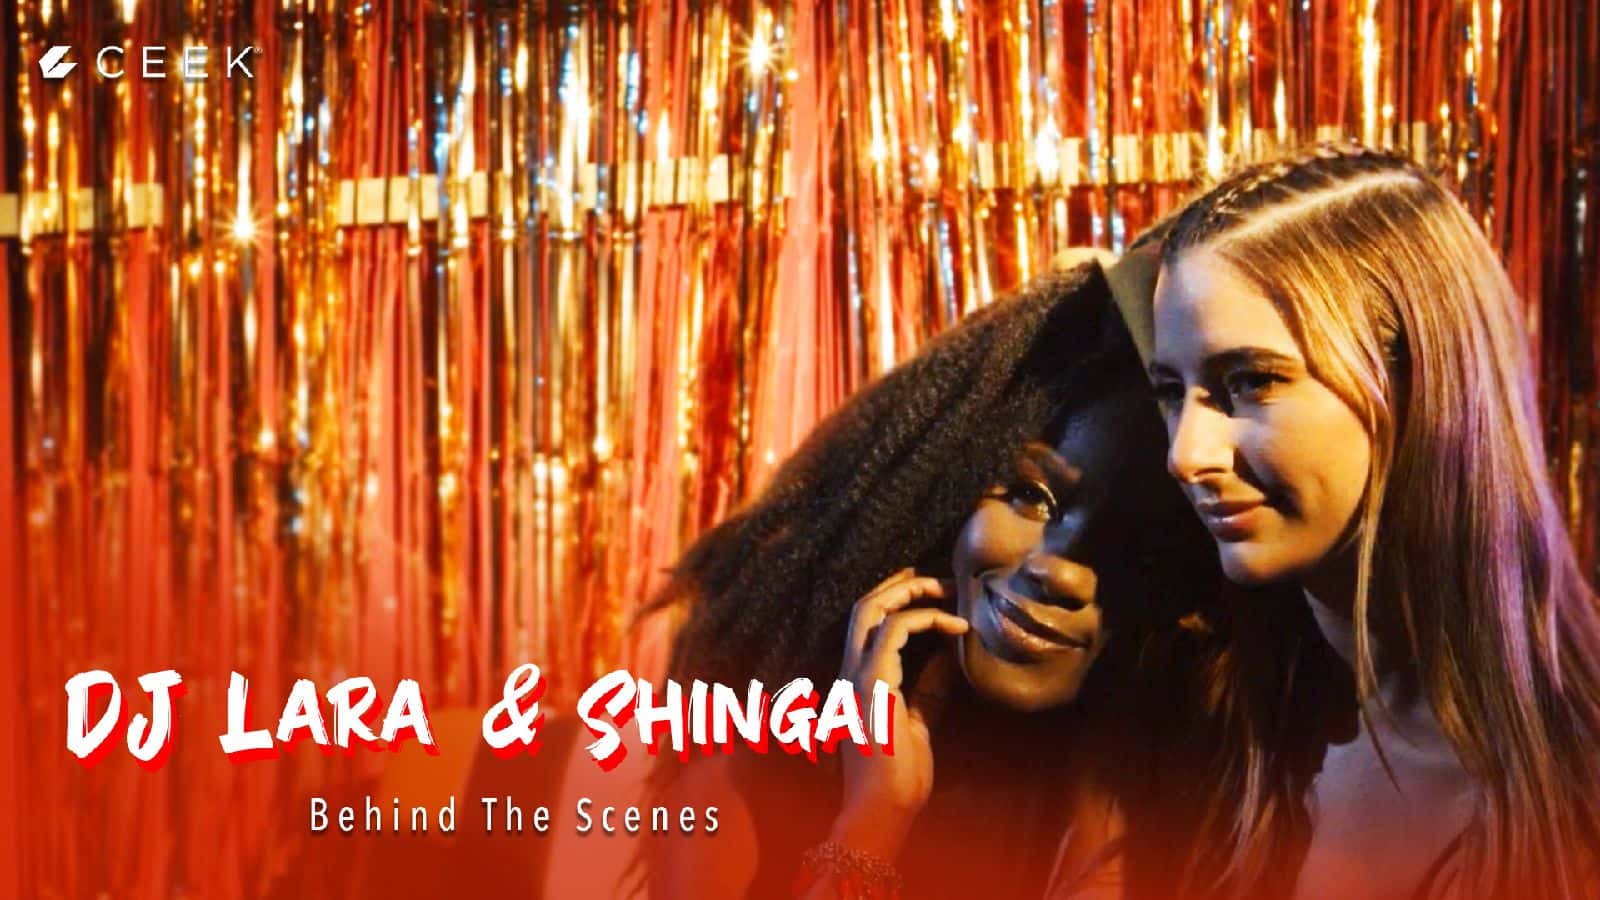 Behind The Scenes - Shingai X DJ Lara - In this world